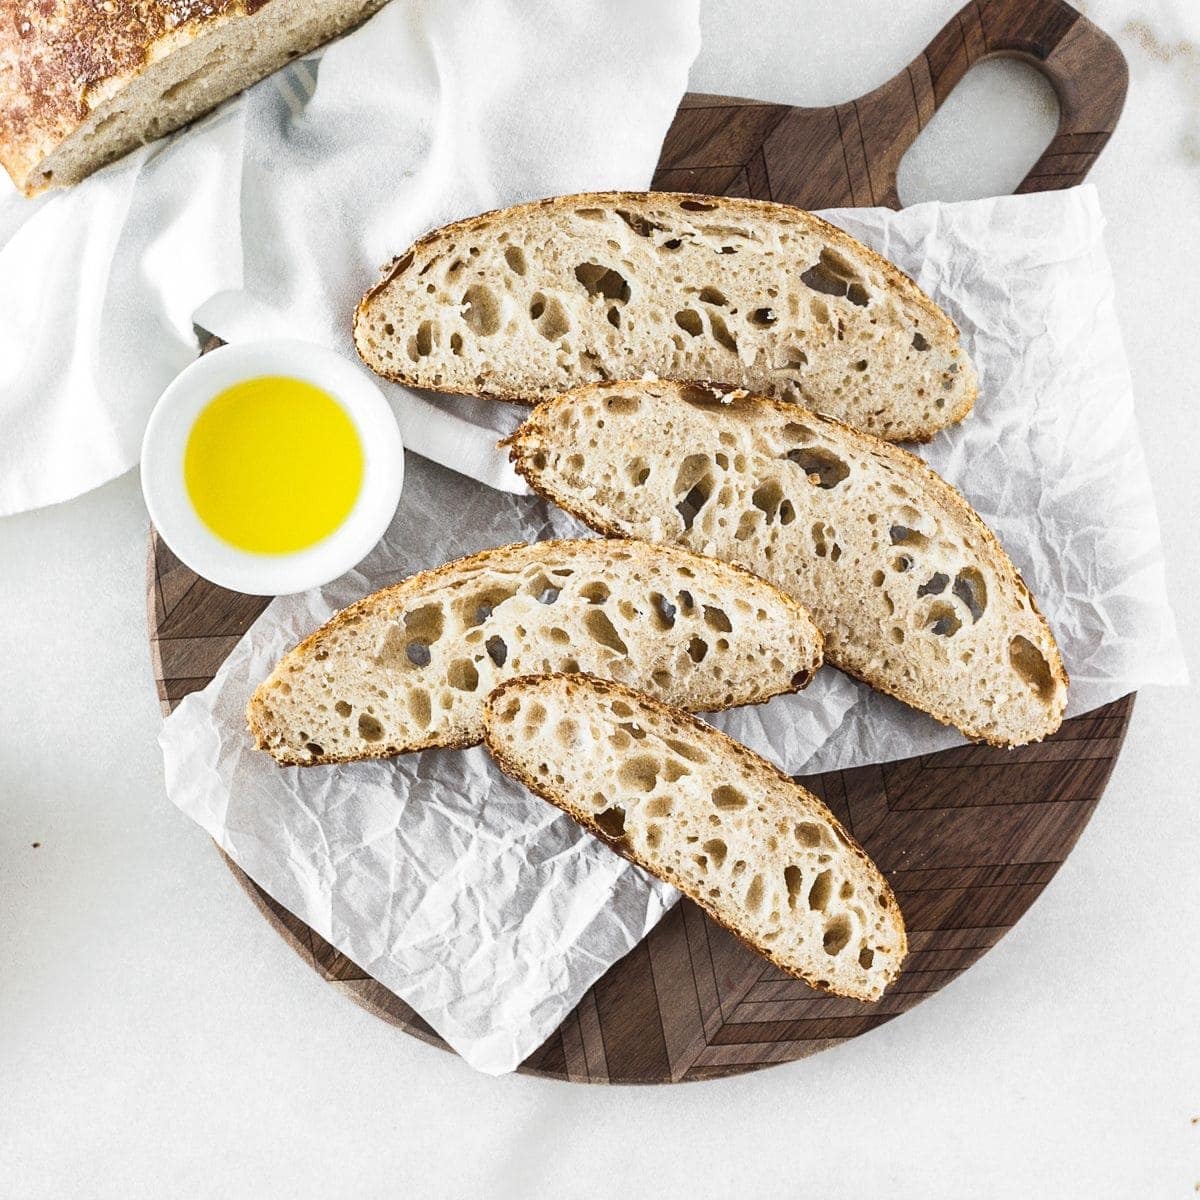 Homemade sourdough bread, natural leaven for bread in a glass jar